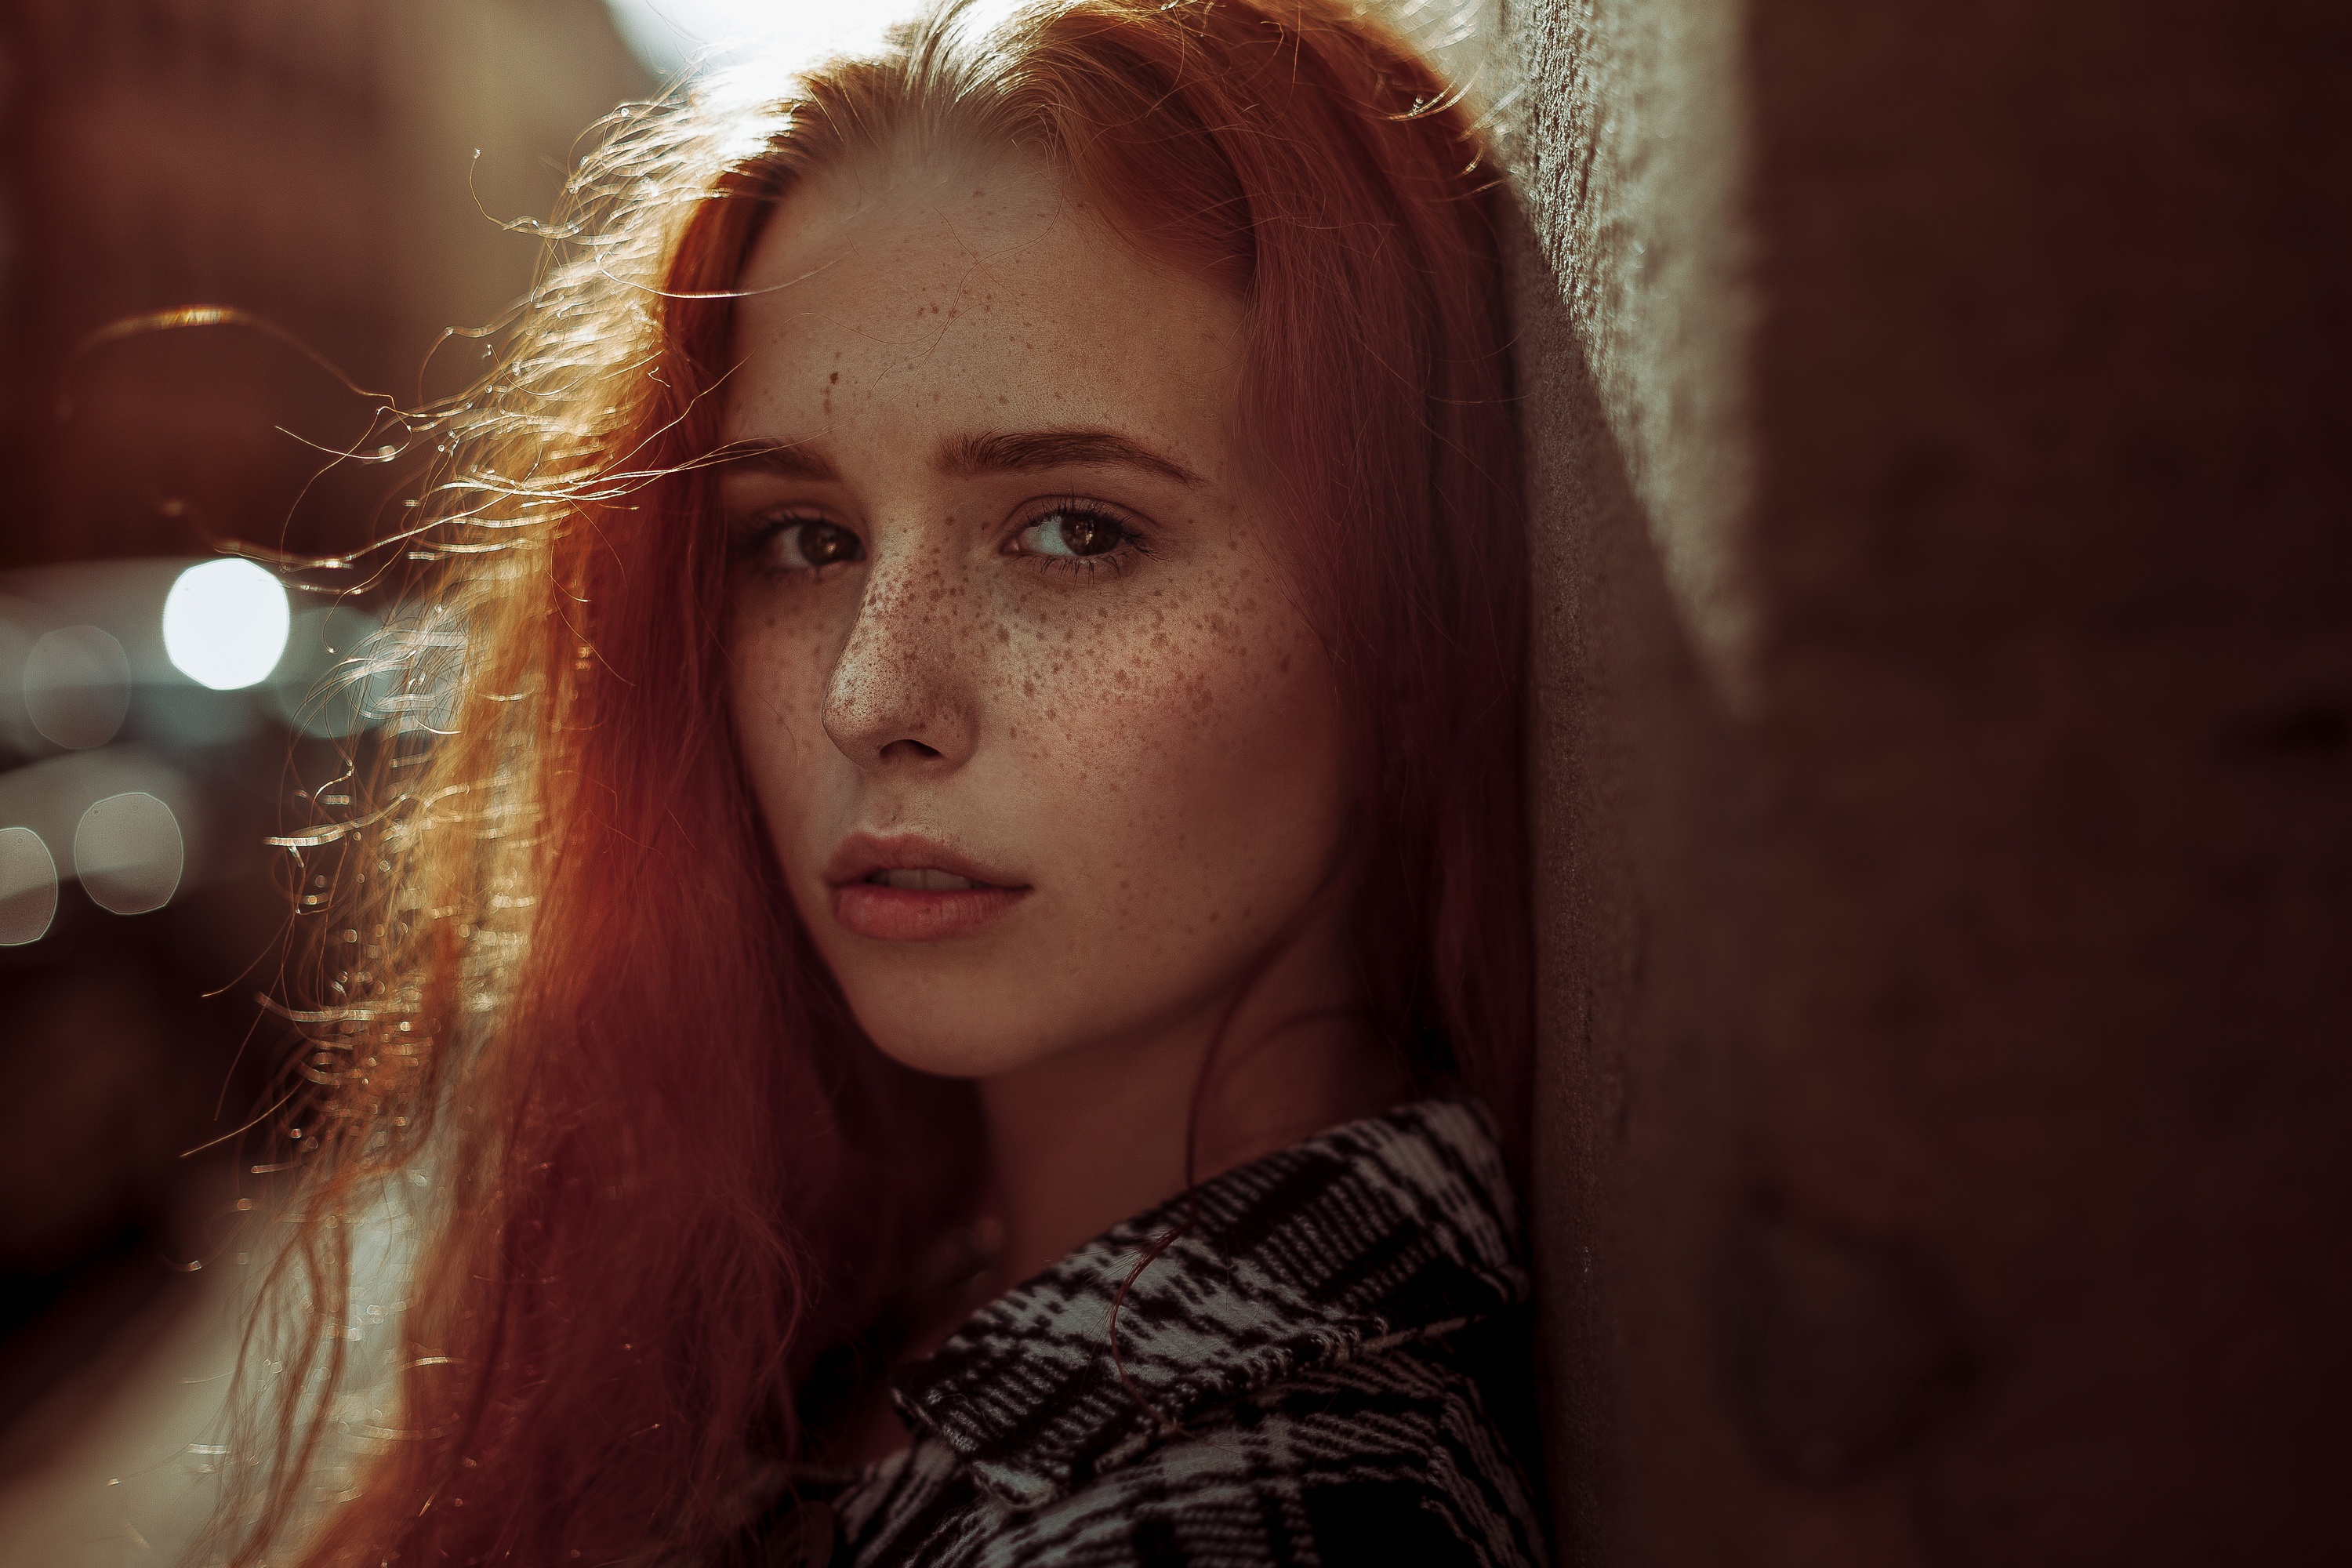 Download Depth Of Field Freckles Redhead Face Woman Model Hd Wallpaper